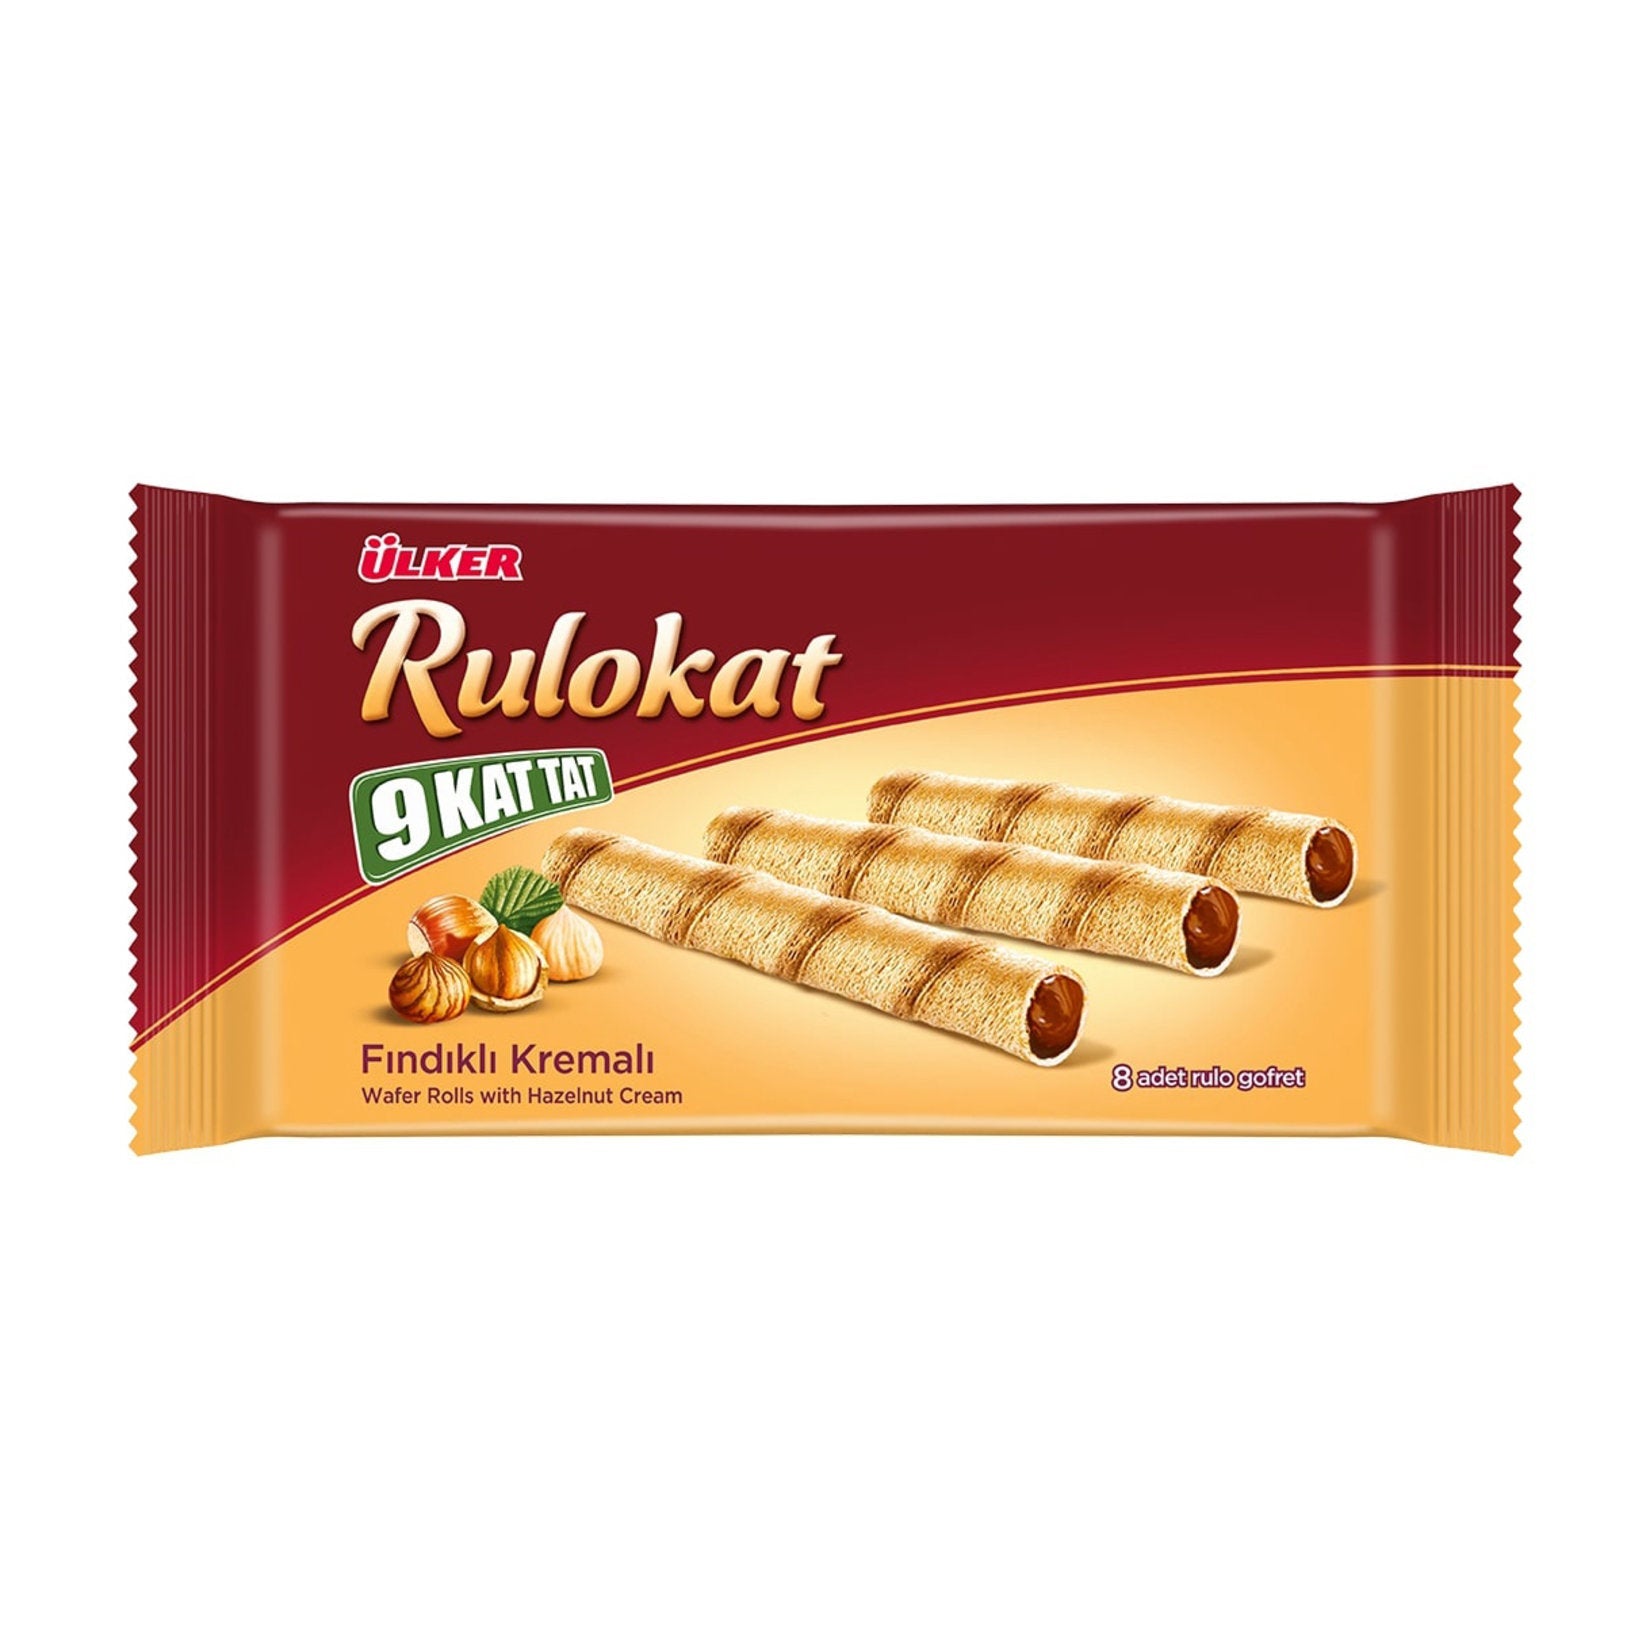 Ulker Rulokat findikli (Ulker Wafers Rolls with Hazelnut Cream)-42gr - Aytac Foods